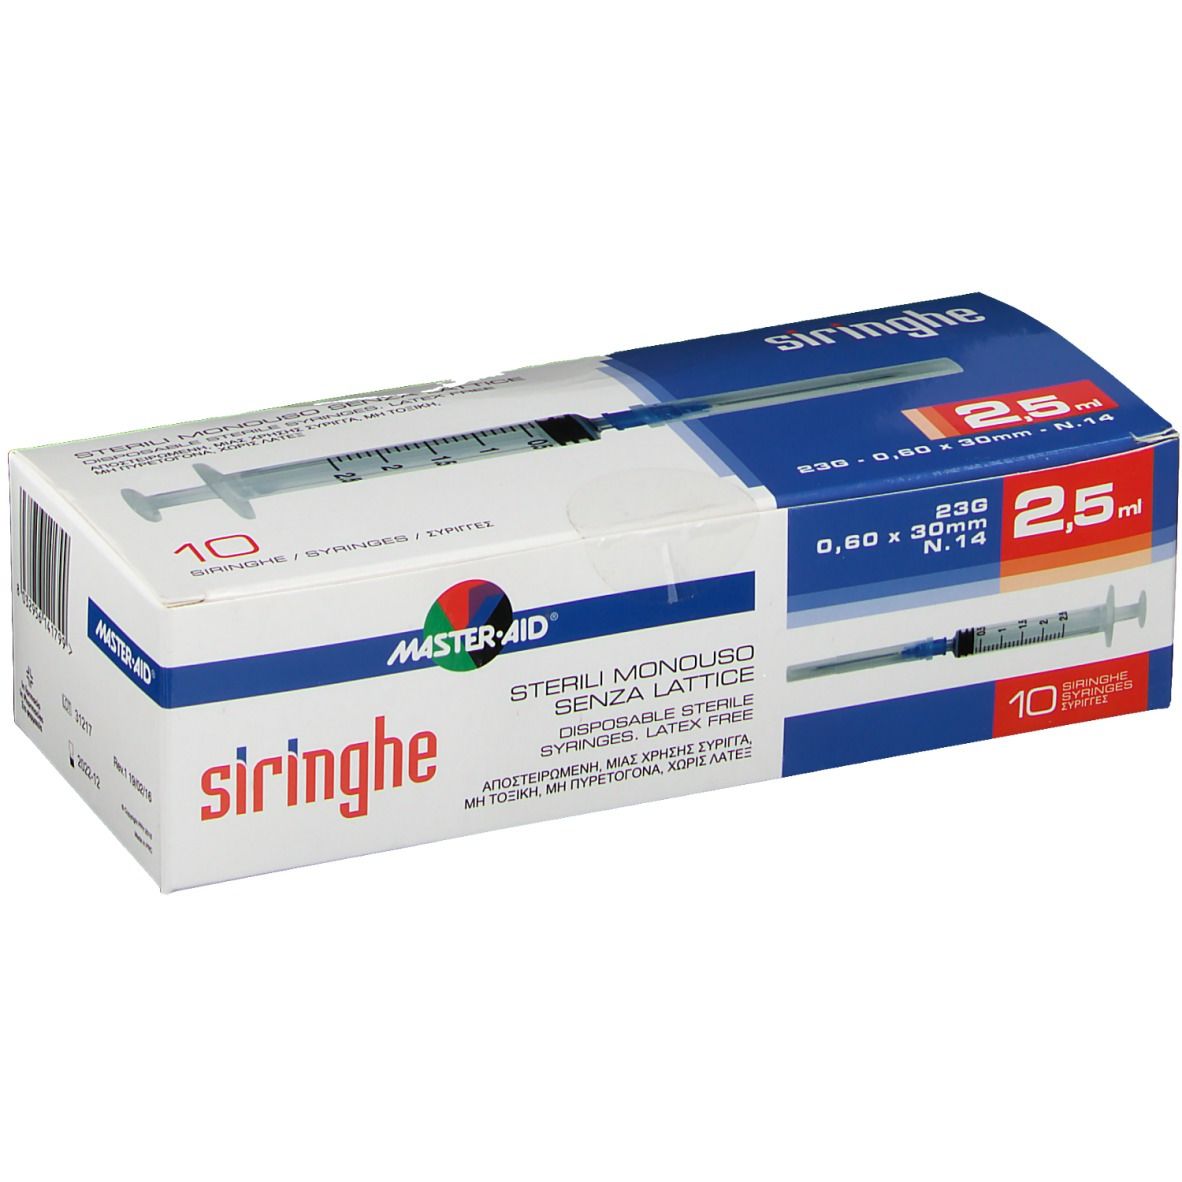 Image of Master Aid® Siringhe Sterili Monouso 2,5 ml